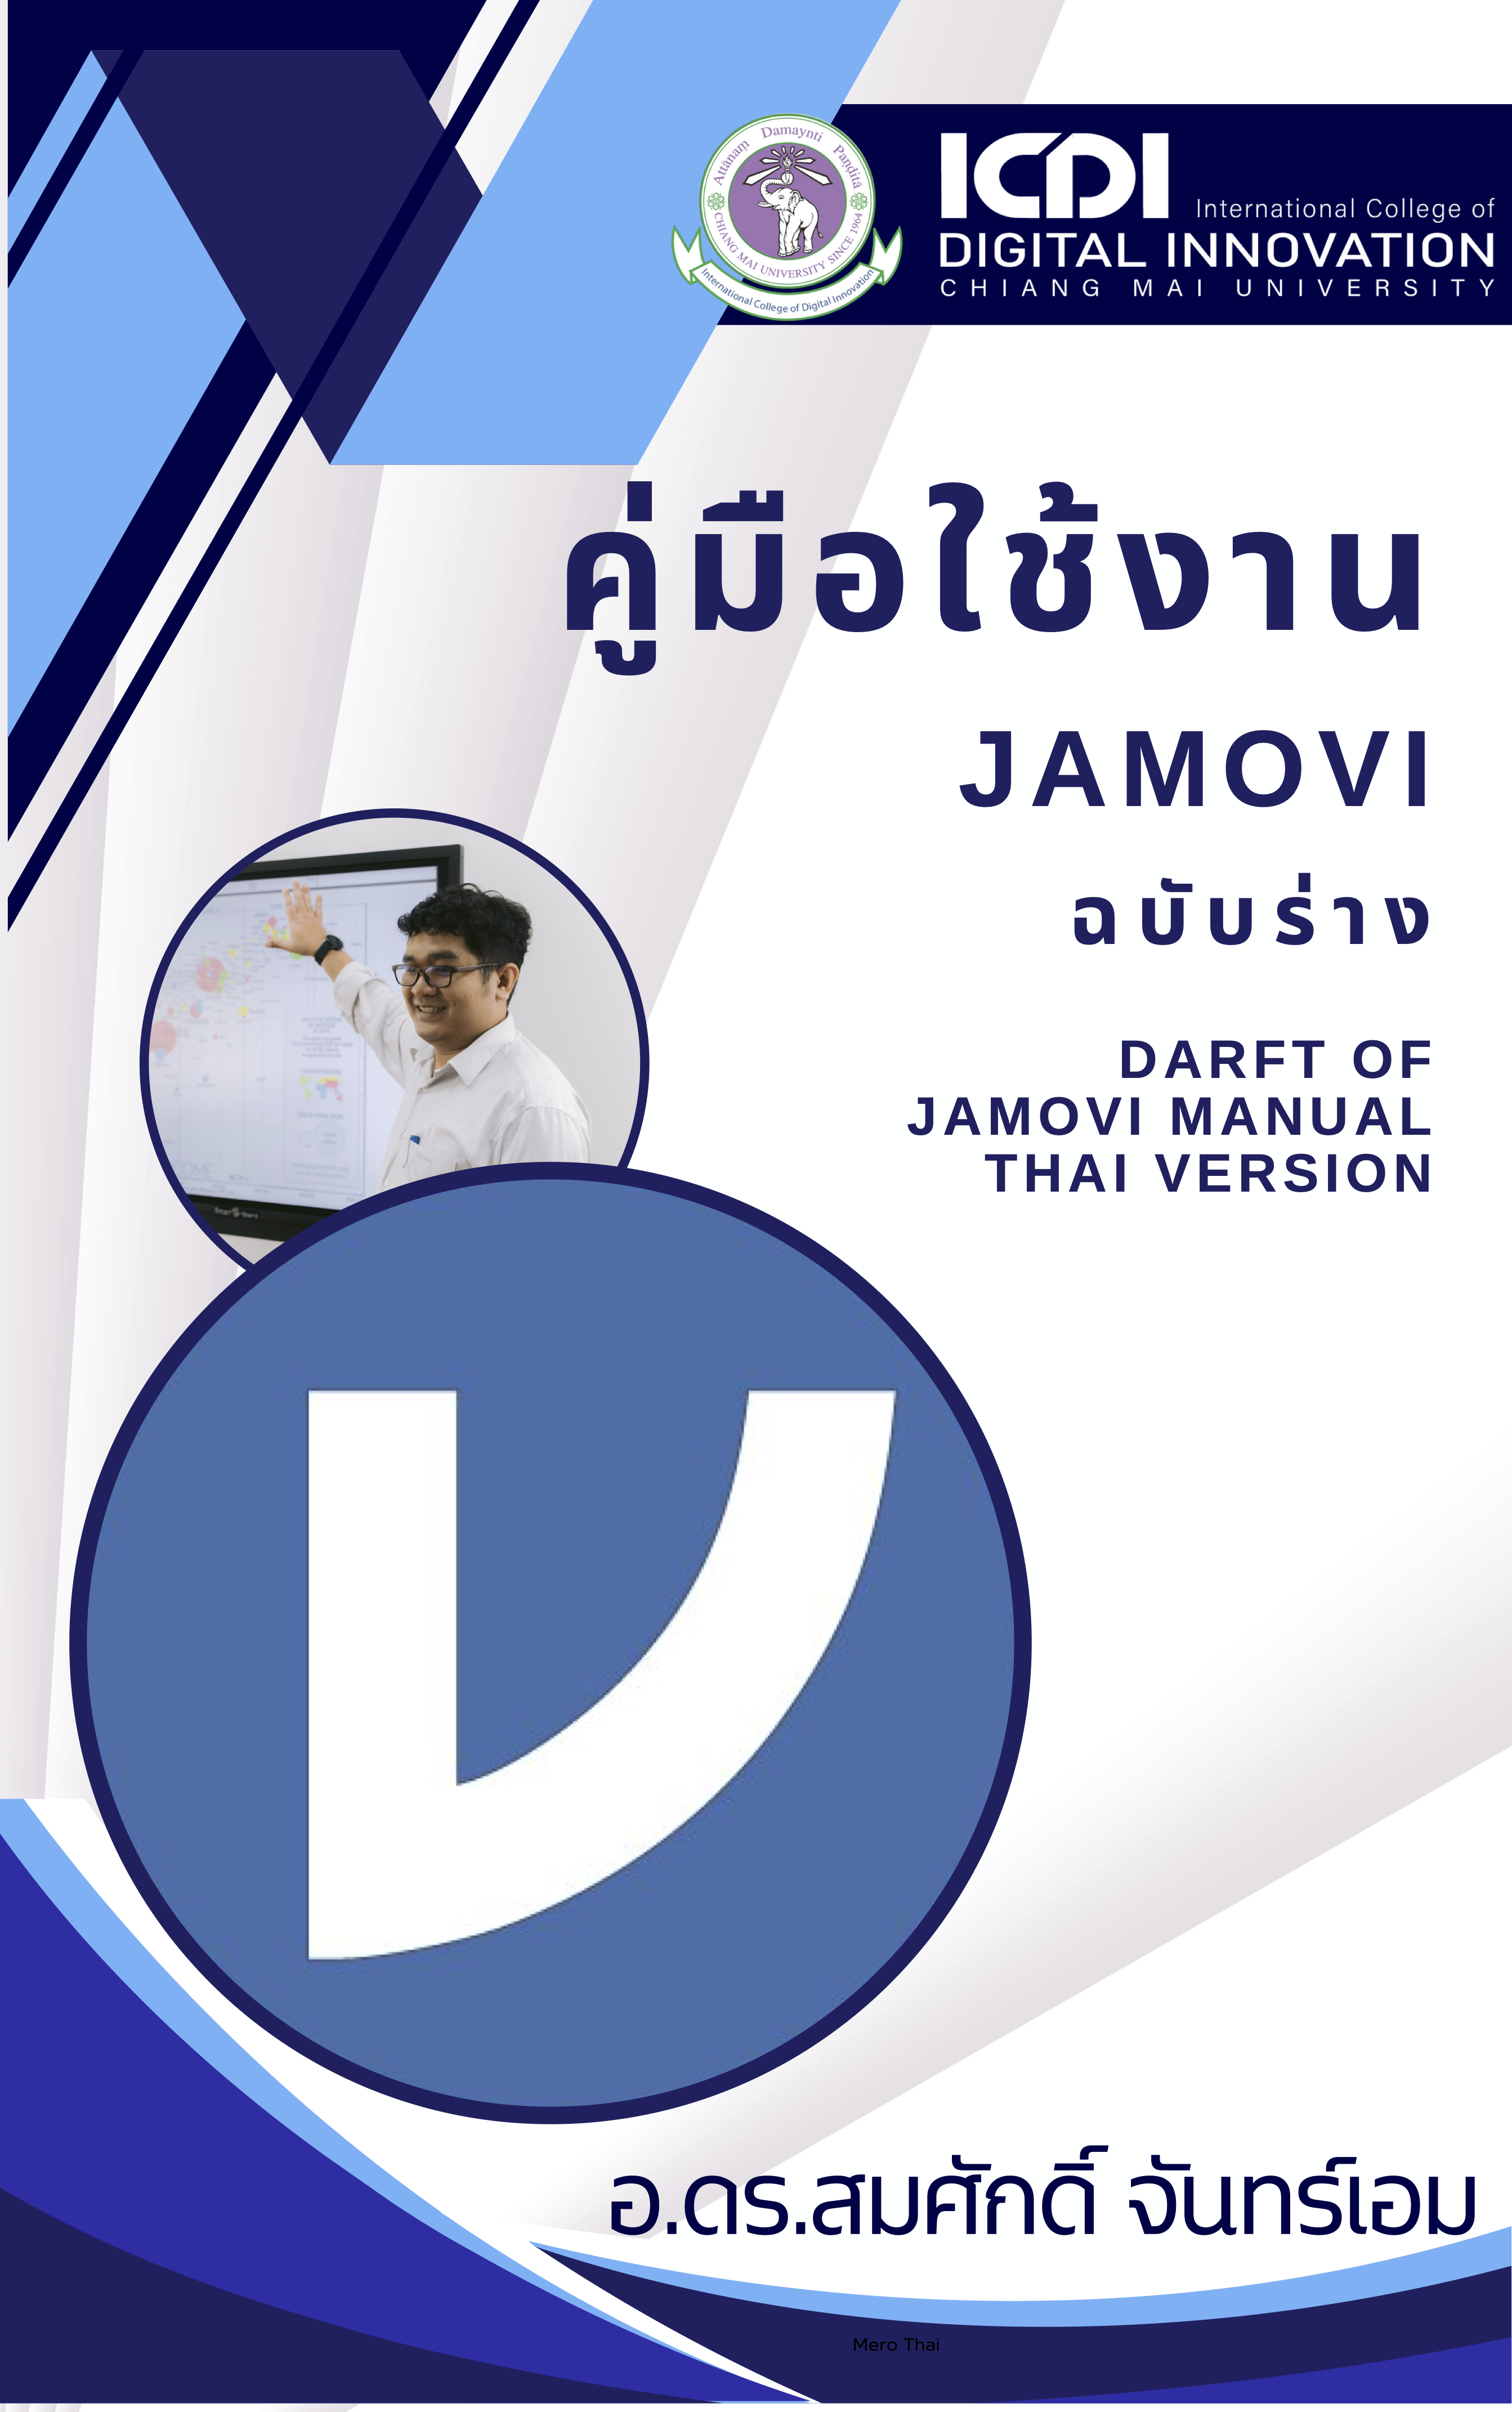 Draft of Jamovi Manual Thai version